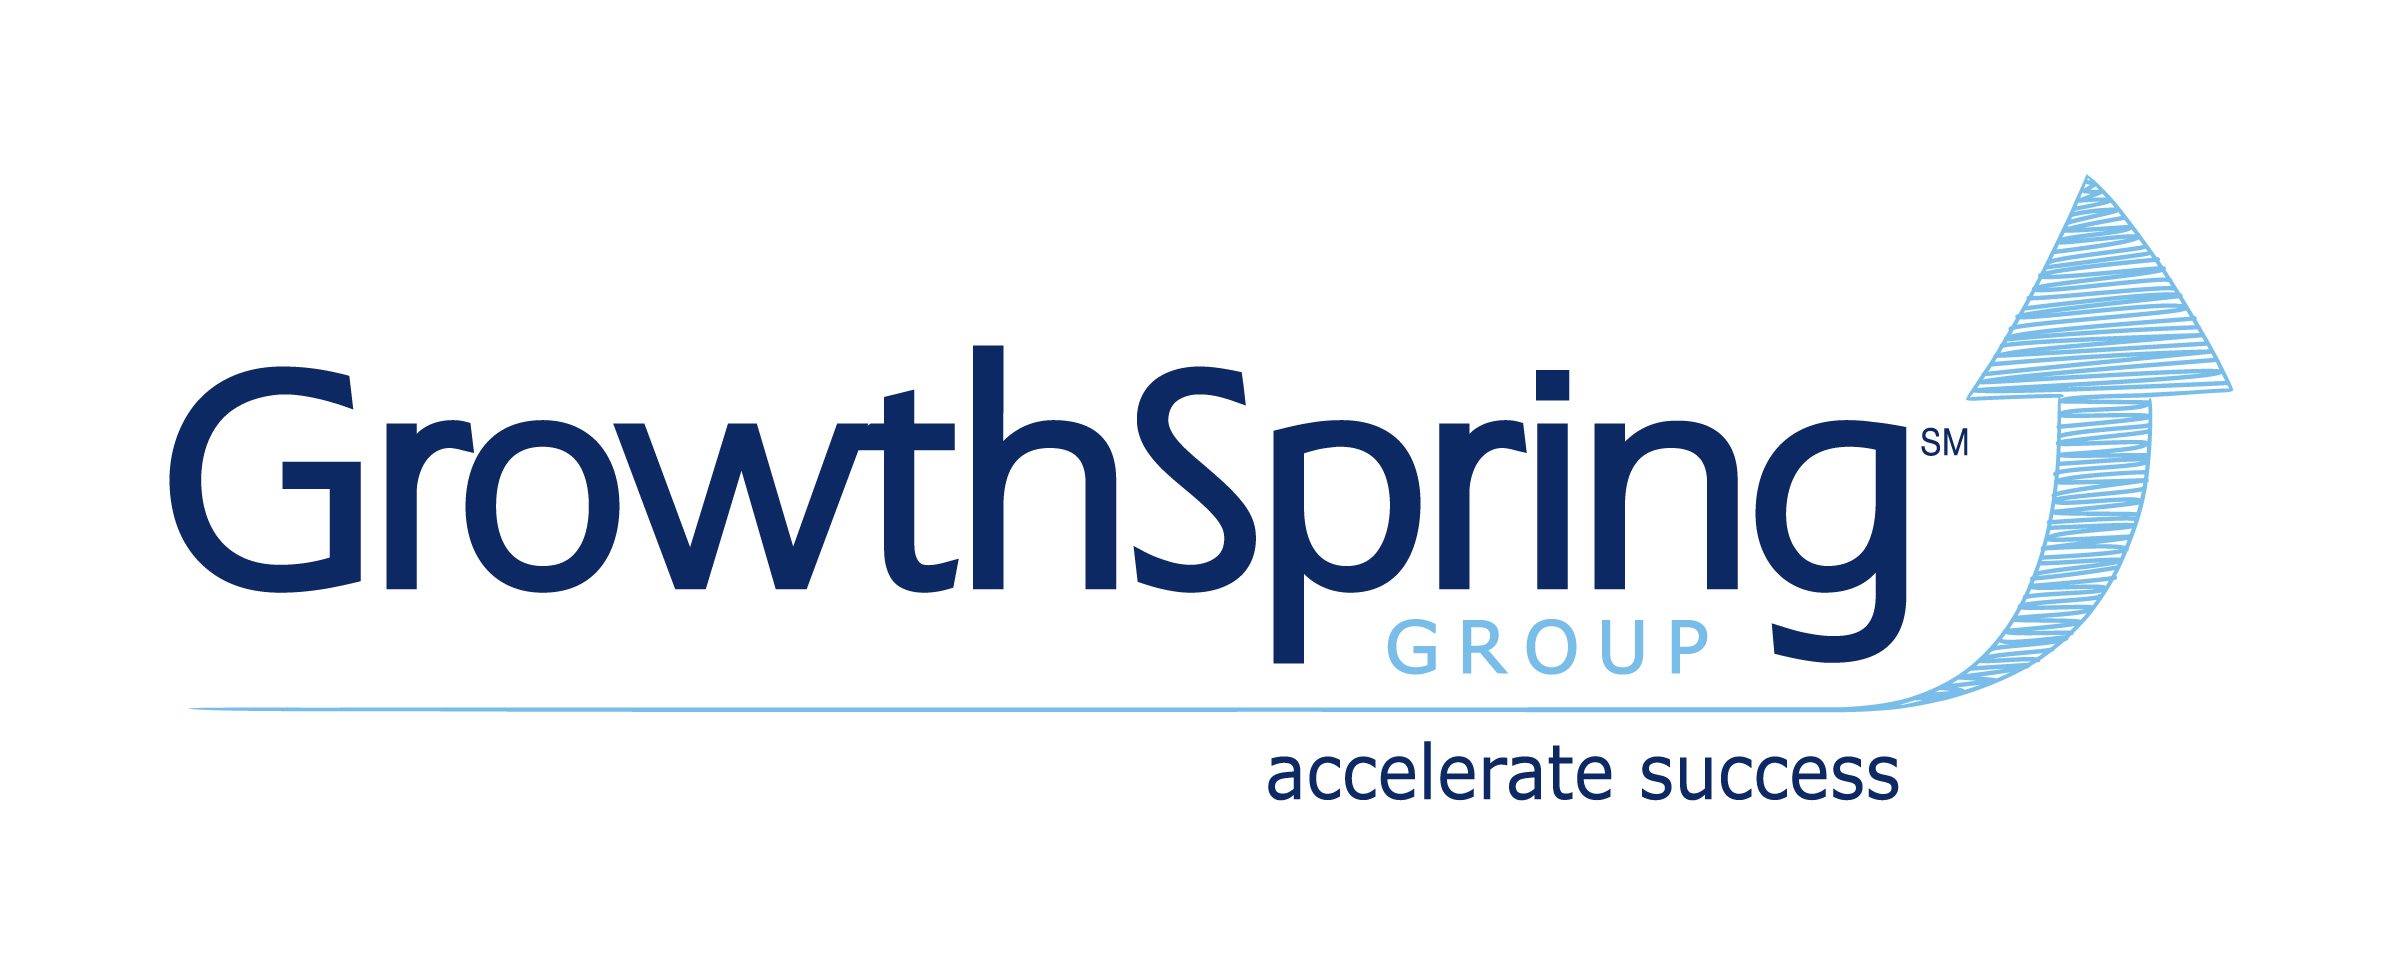 GrowthSpring Group